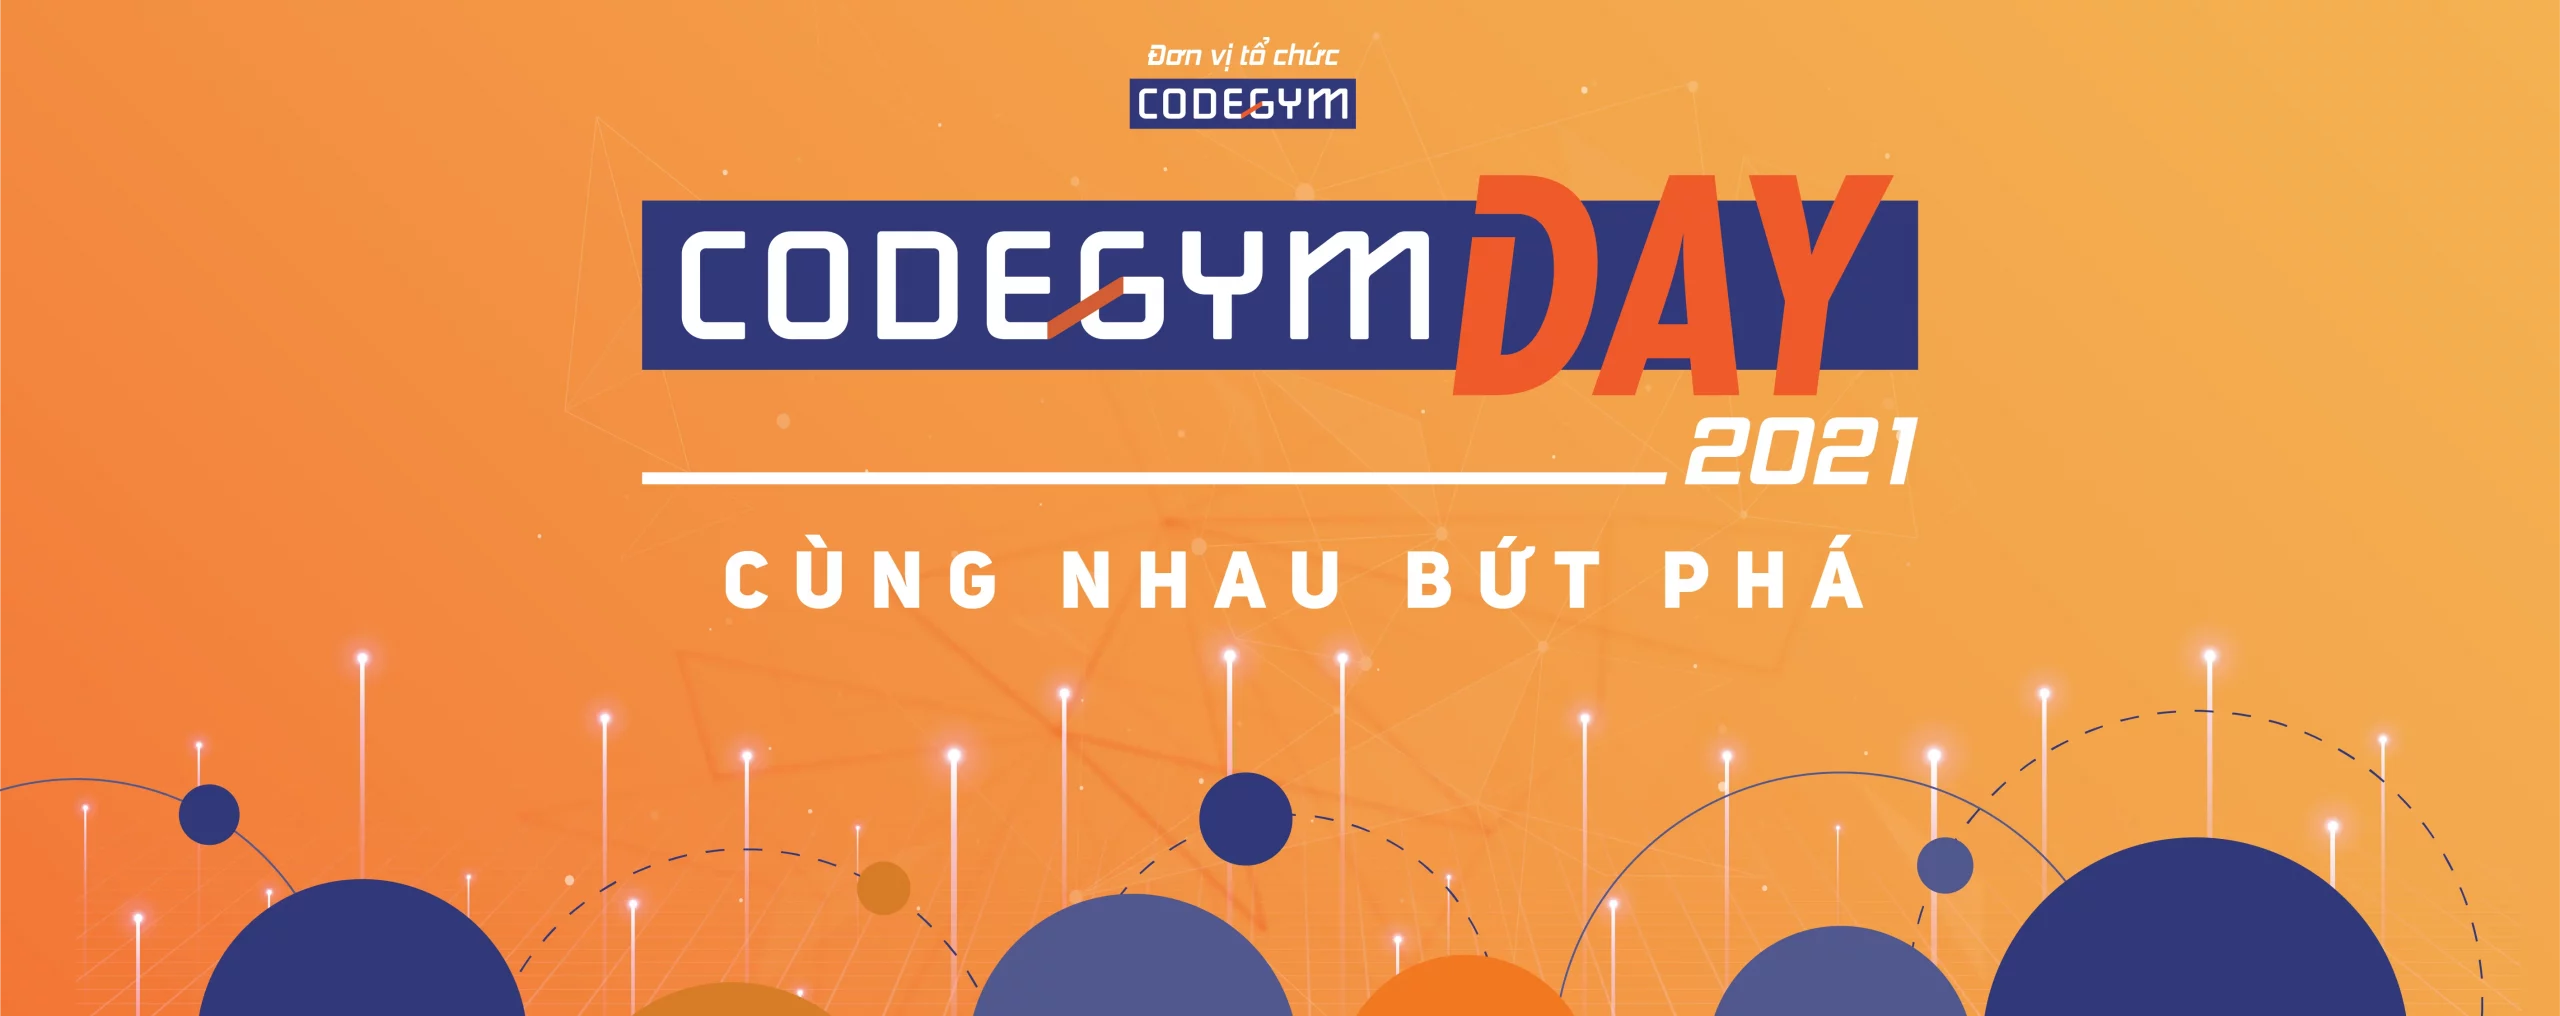 CodeGym Day 2021